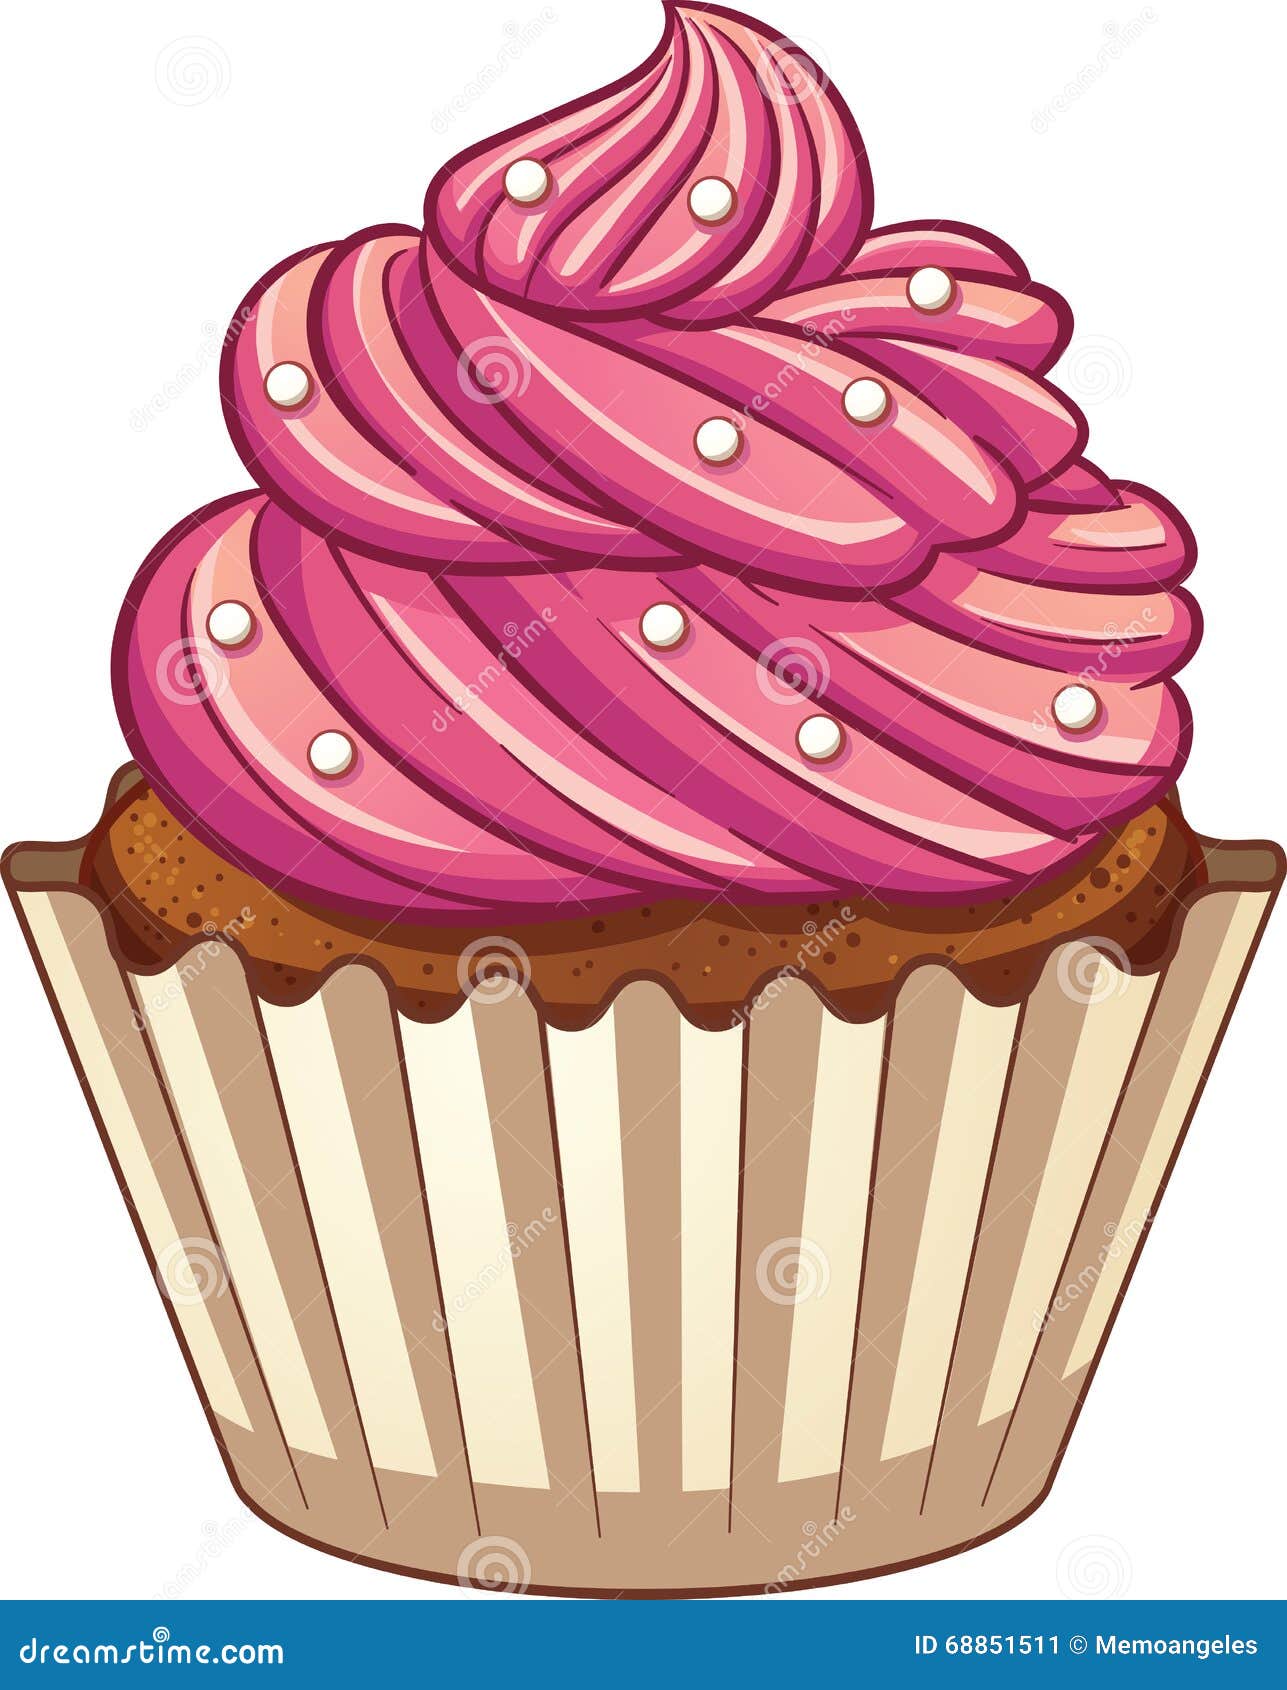 Cartoon cupcake stock vector. Illustration of cream, sweet ...